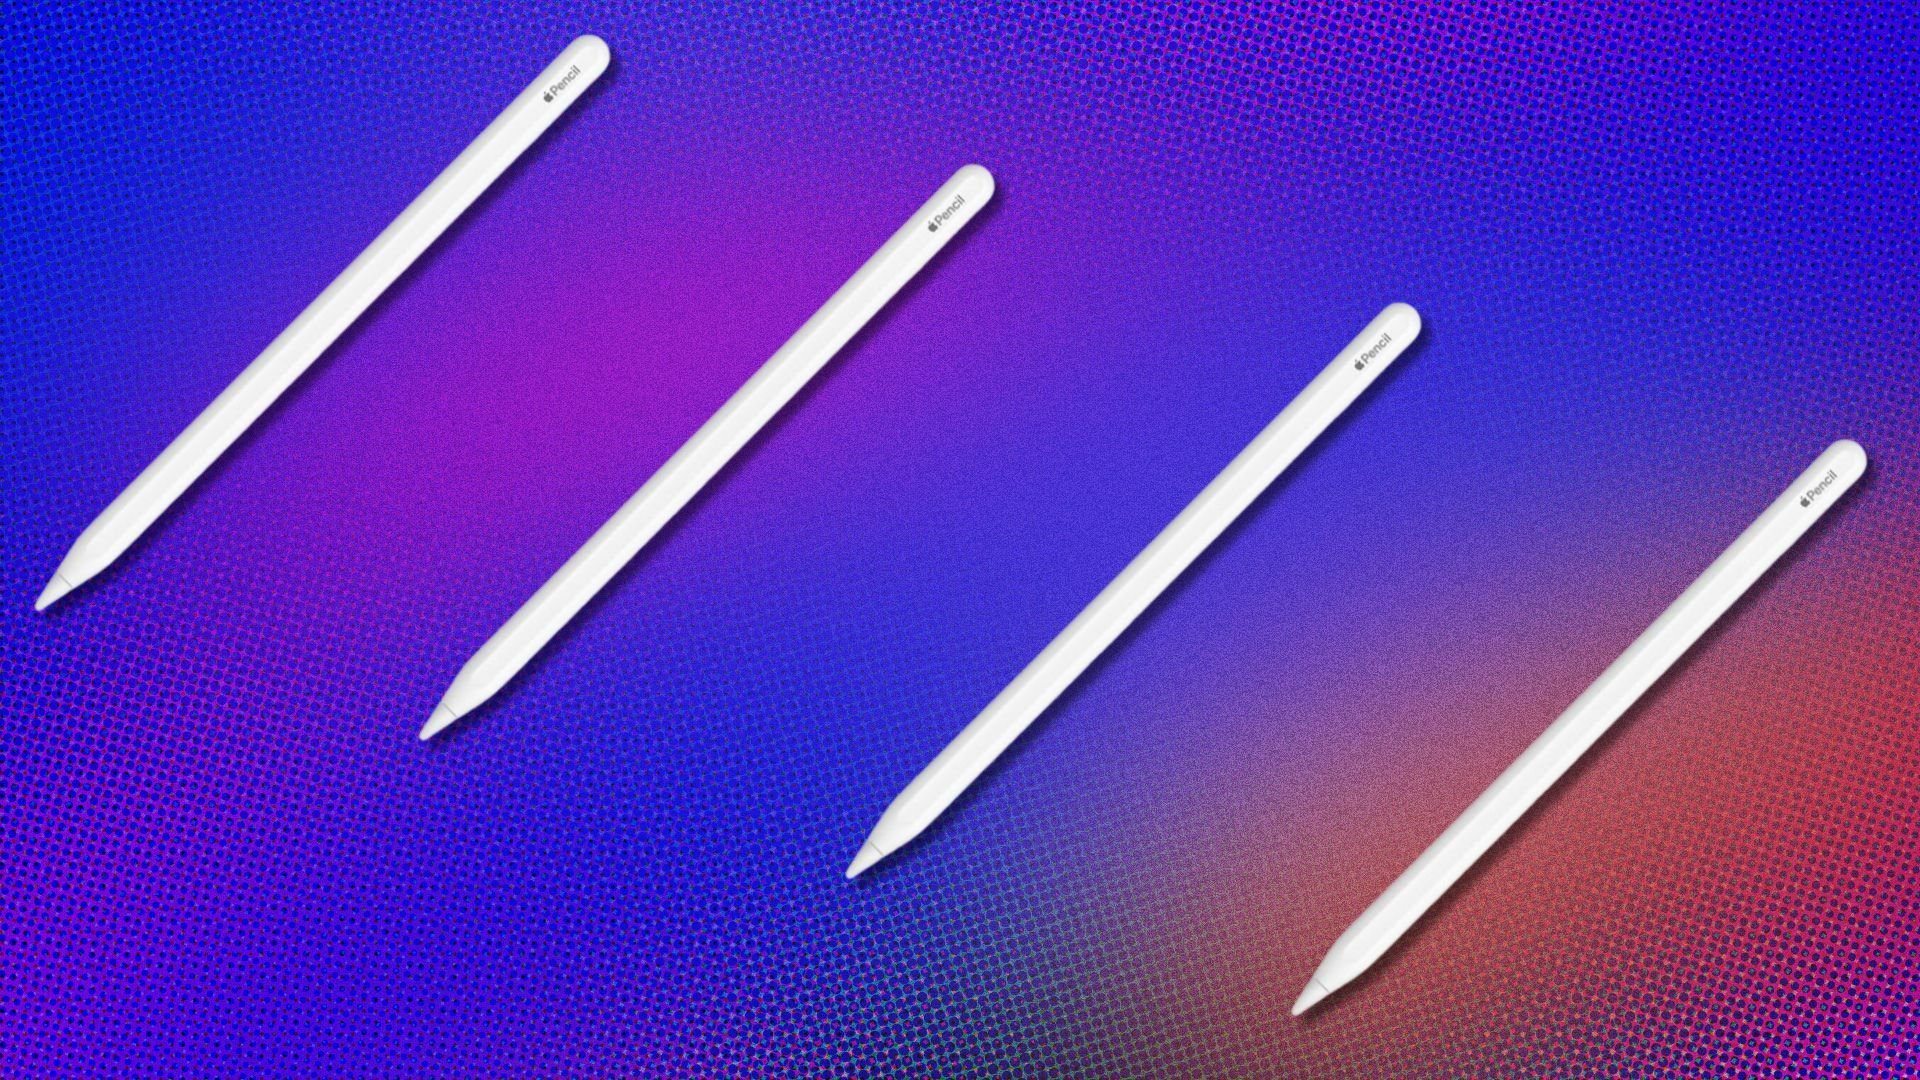 four apple pencils on a purple background